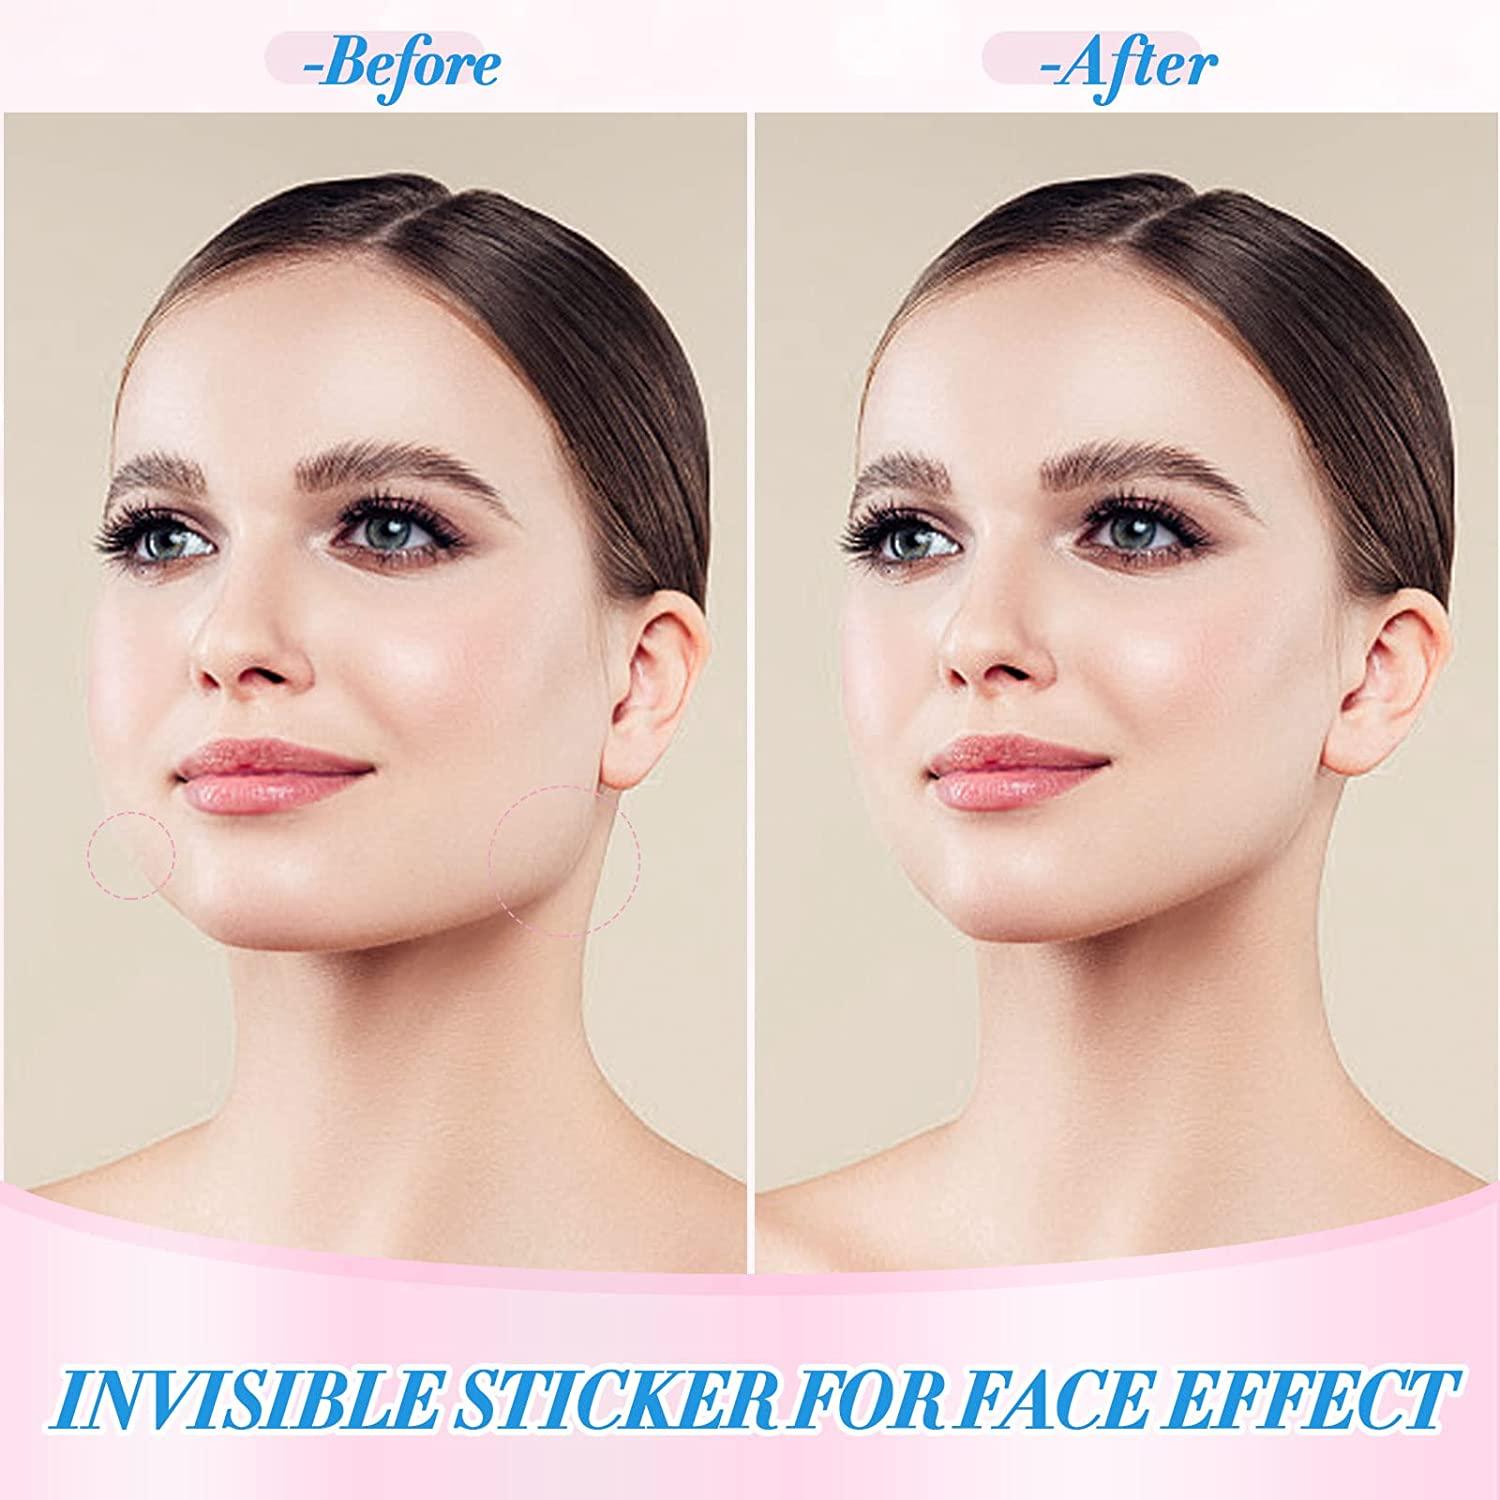 How to use face tape #facetape #makeuphelp #facetapefacelift #facelift, Face Lifting Makeup